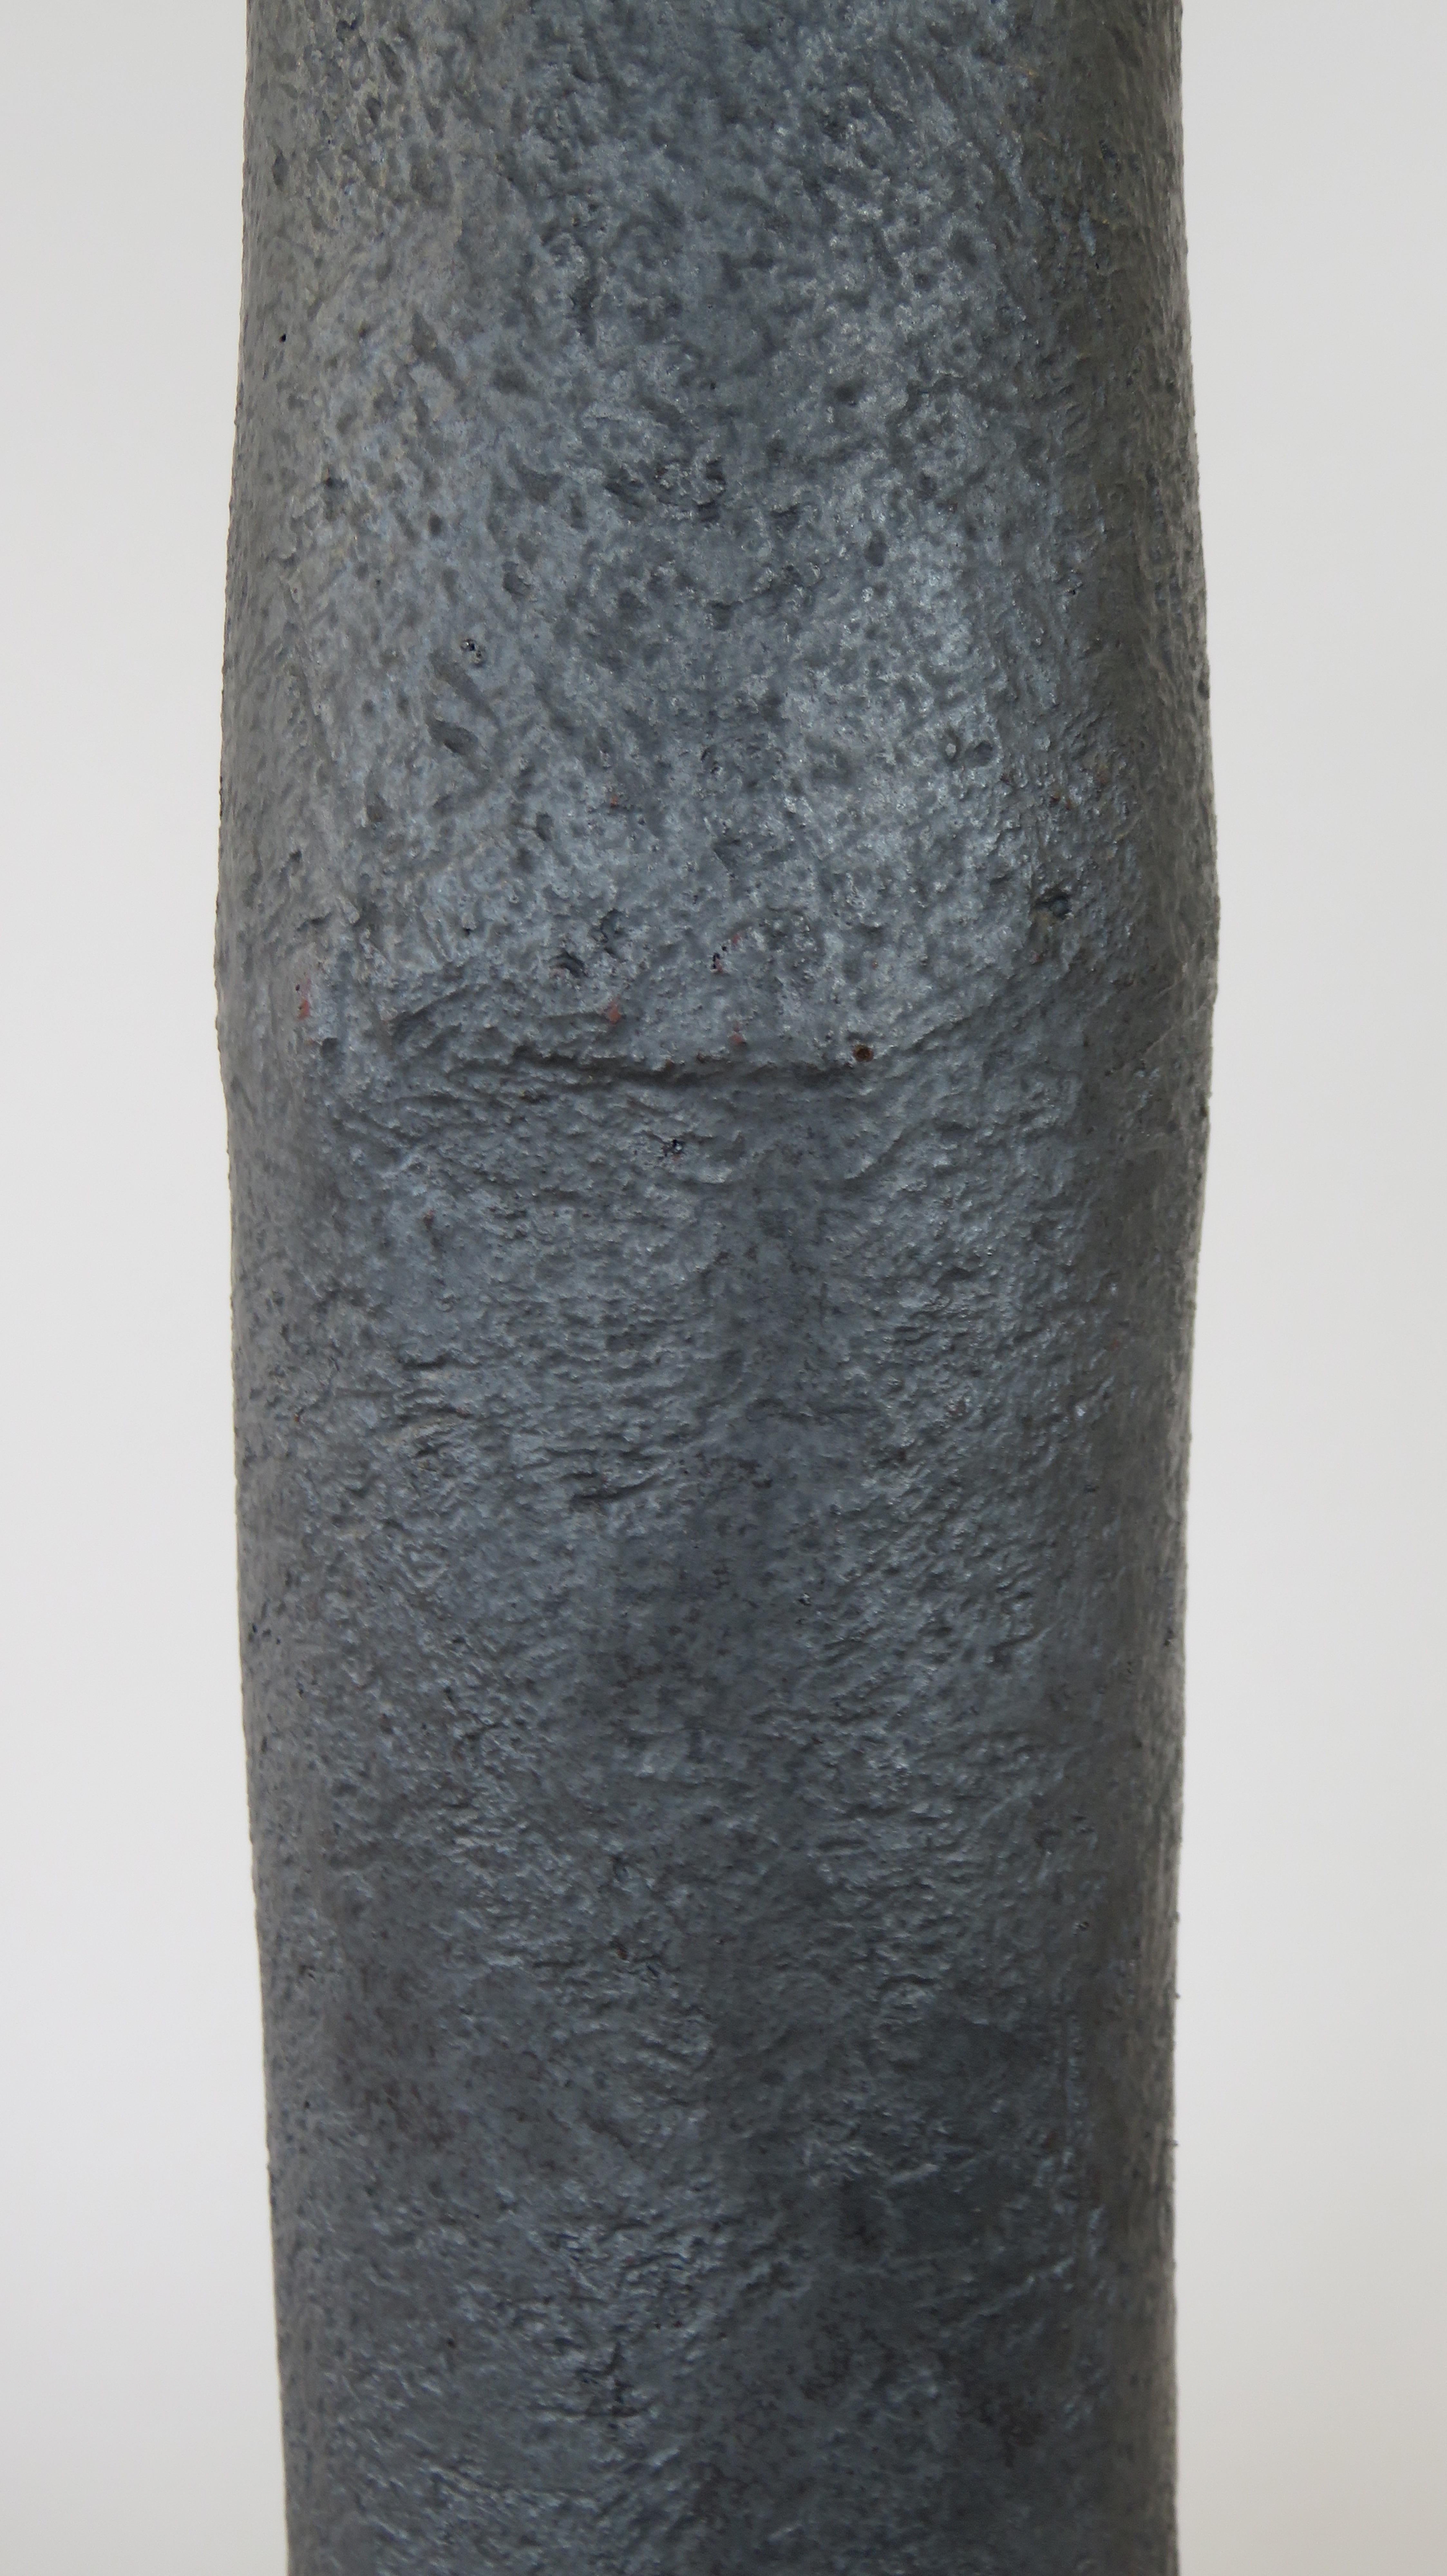 Tall, Tubular Metallic Black Ceramic Stoneware Vase, Hand Built 19 Inches Tall (Keramik)